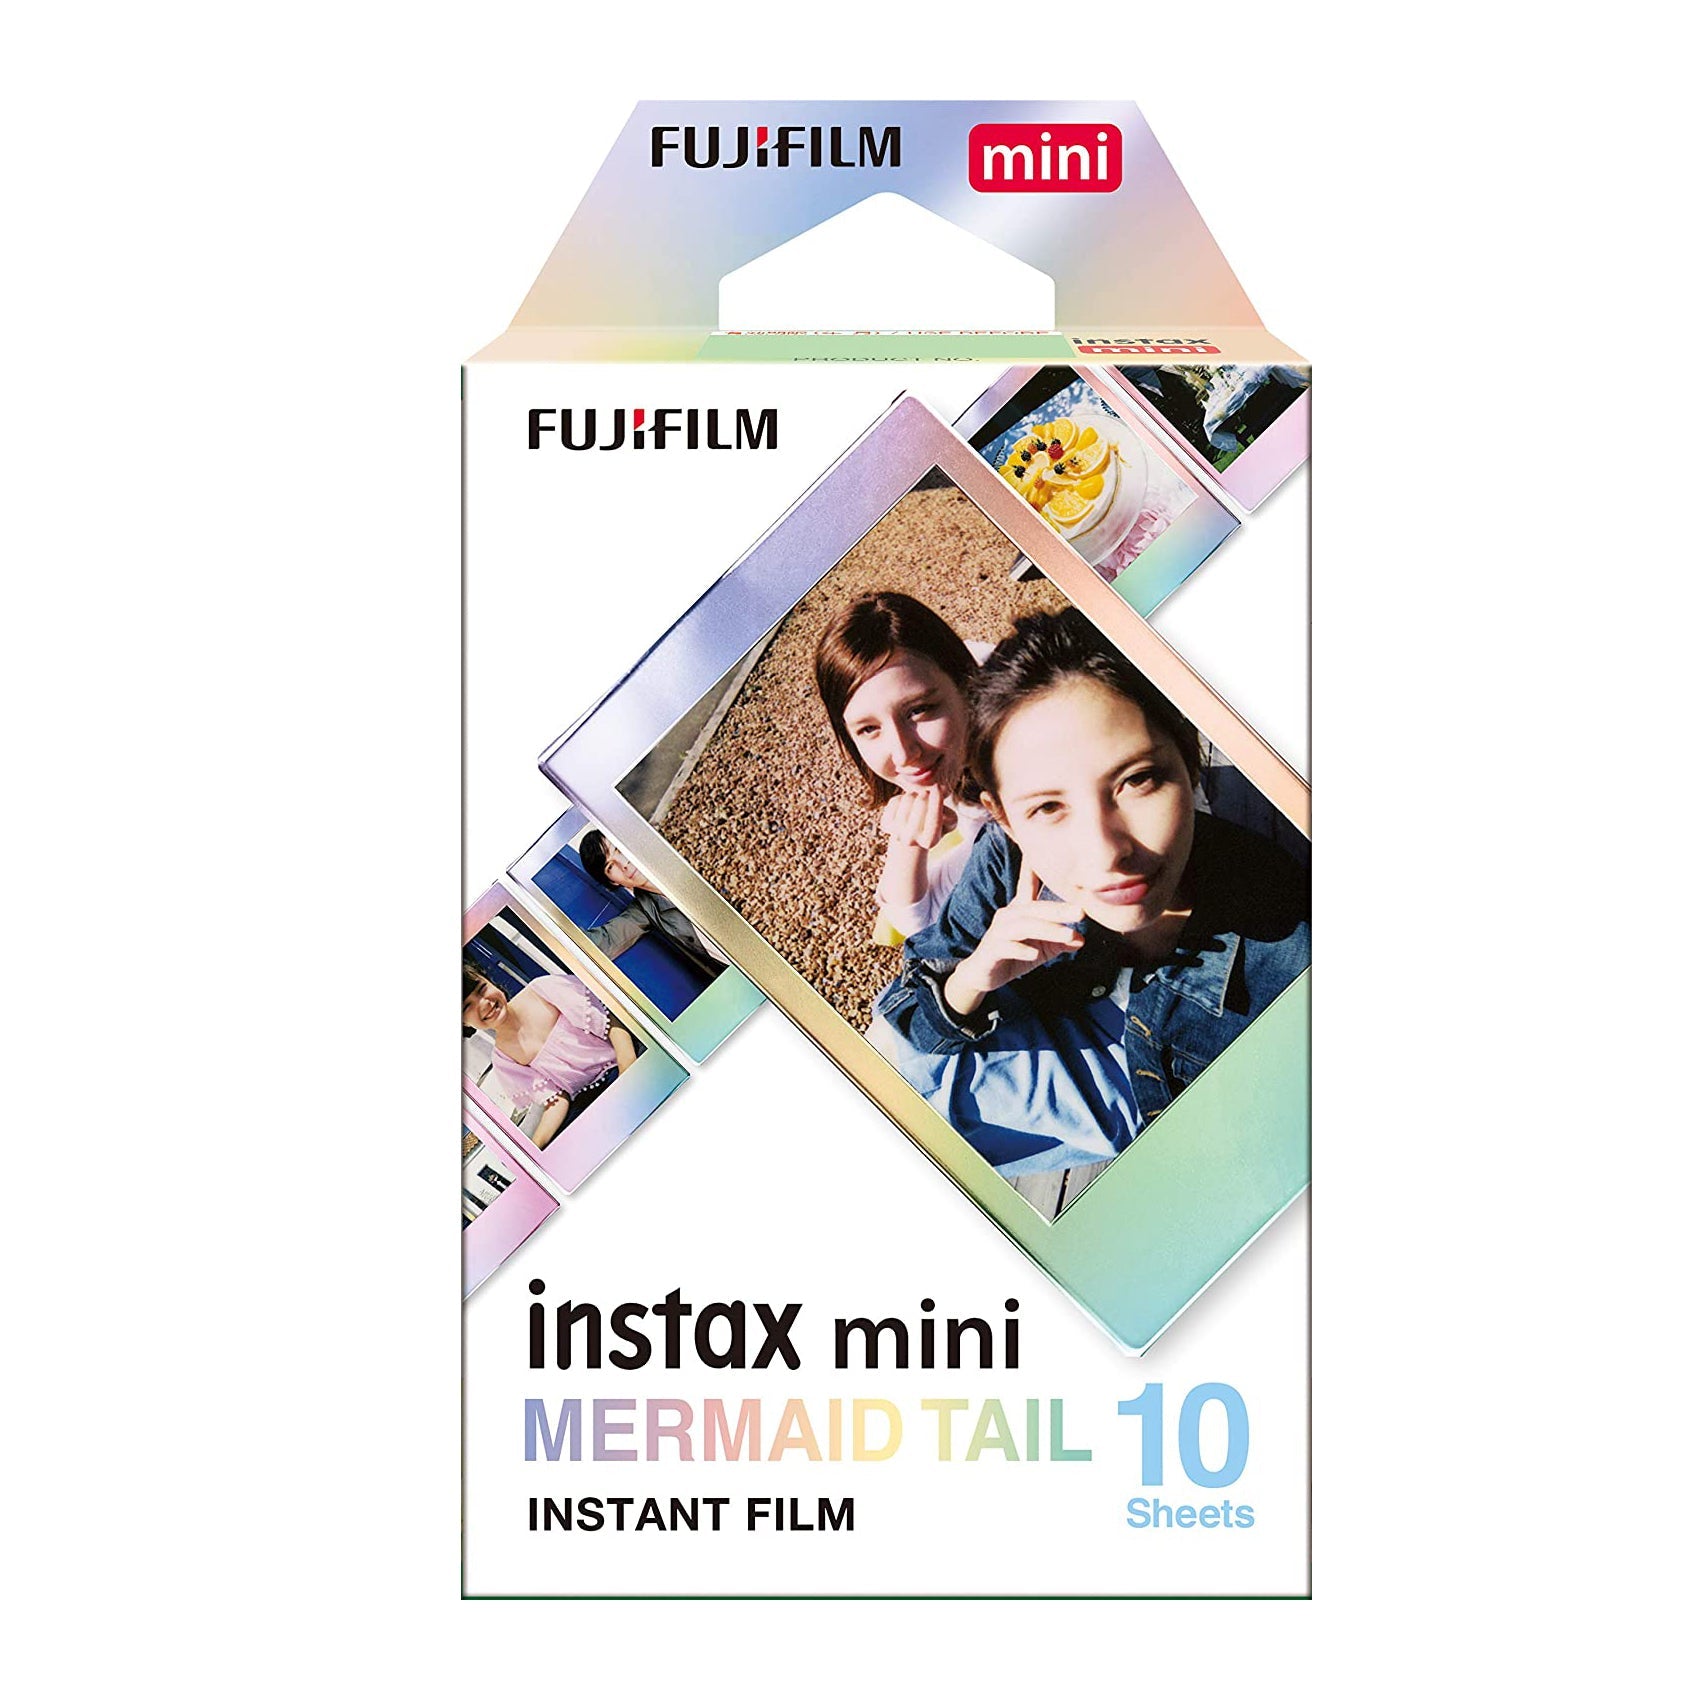 Fujifilm Instax Mini 10X1 mermaid tail Instant Film with Instax Time Photo Album 64 Sheets (Peach pink)